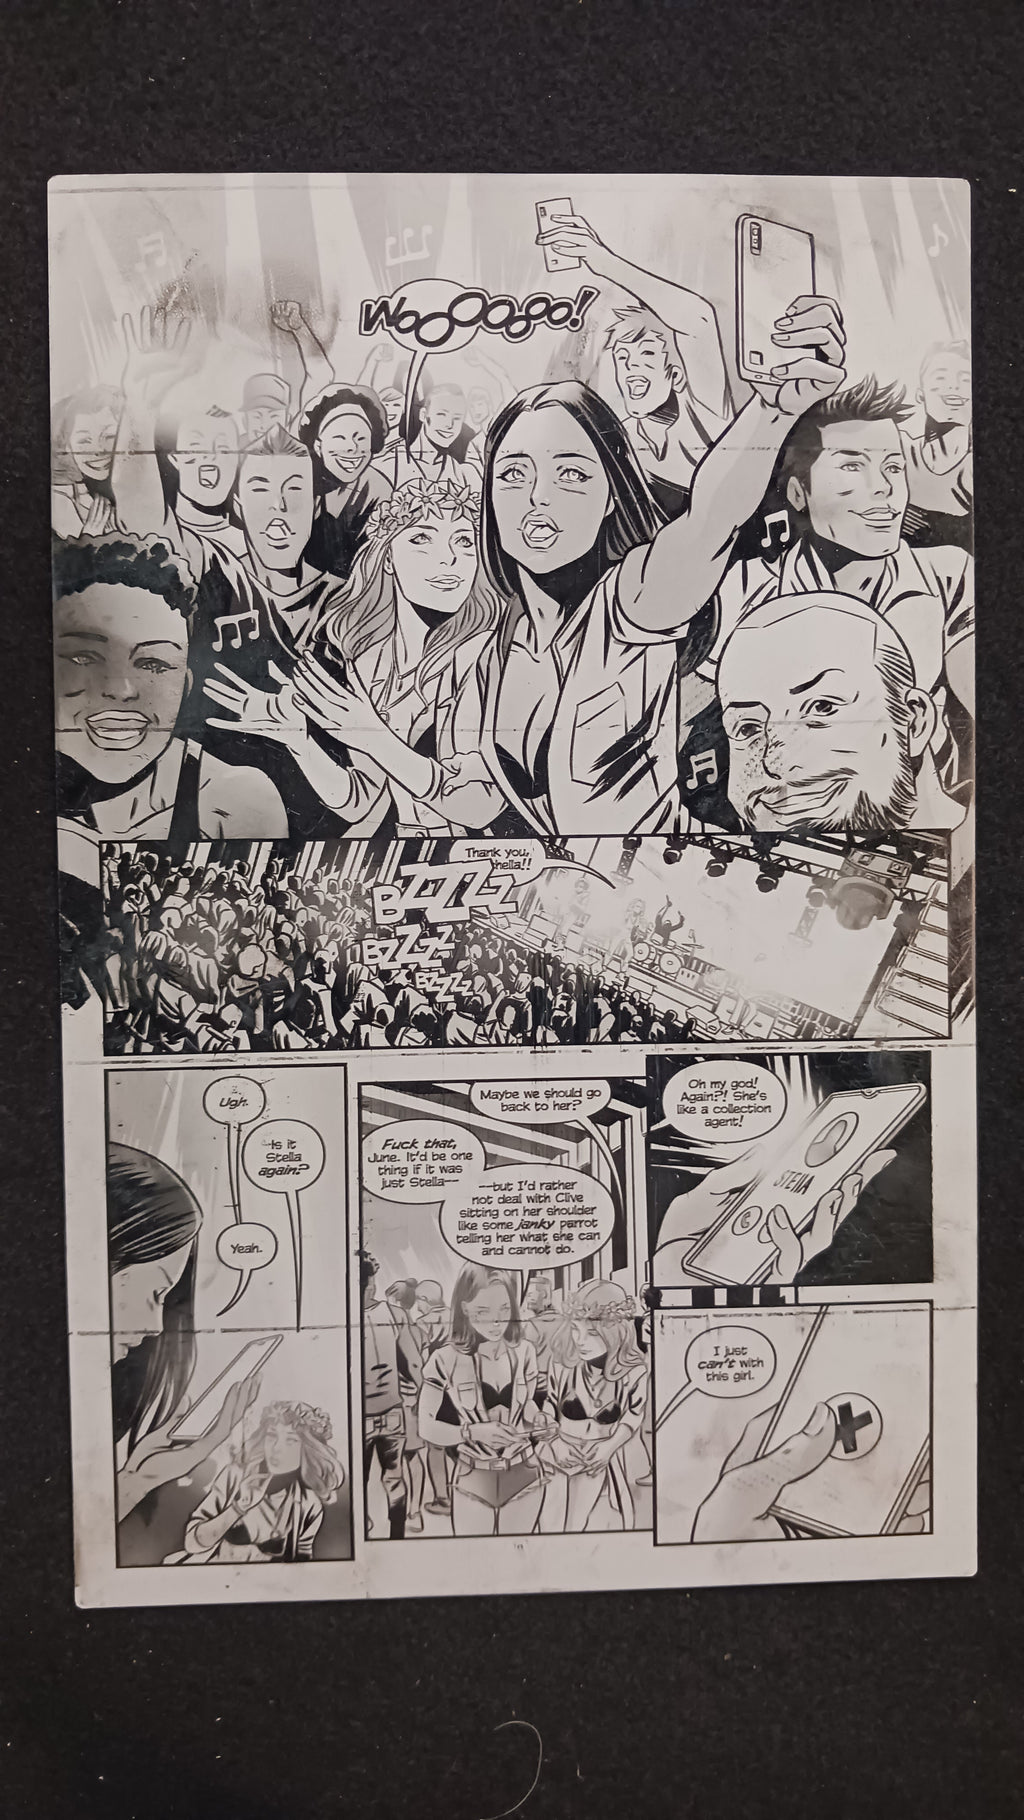 Killchella #2 - Page 14 - PRESSWORKS - Comic Art - Printer Plate - Black